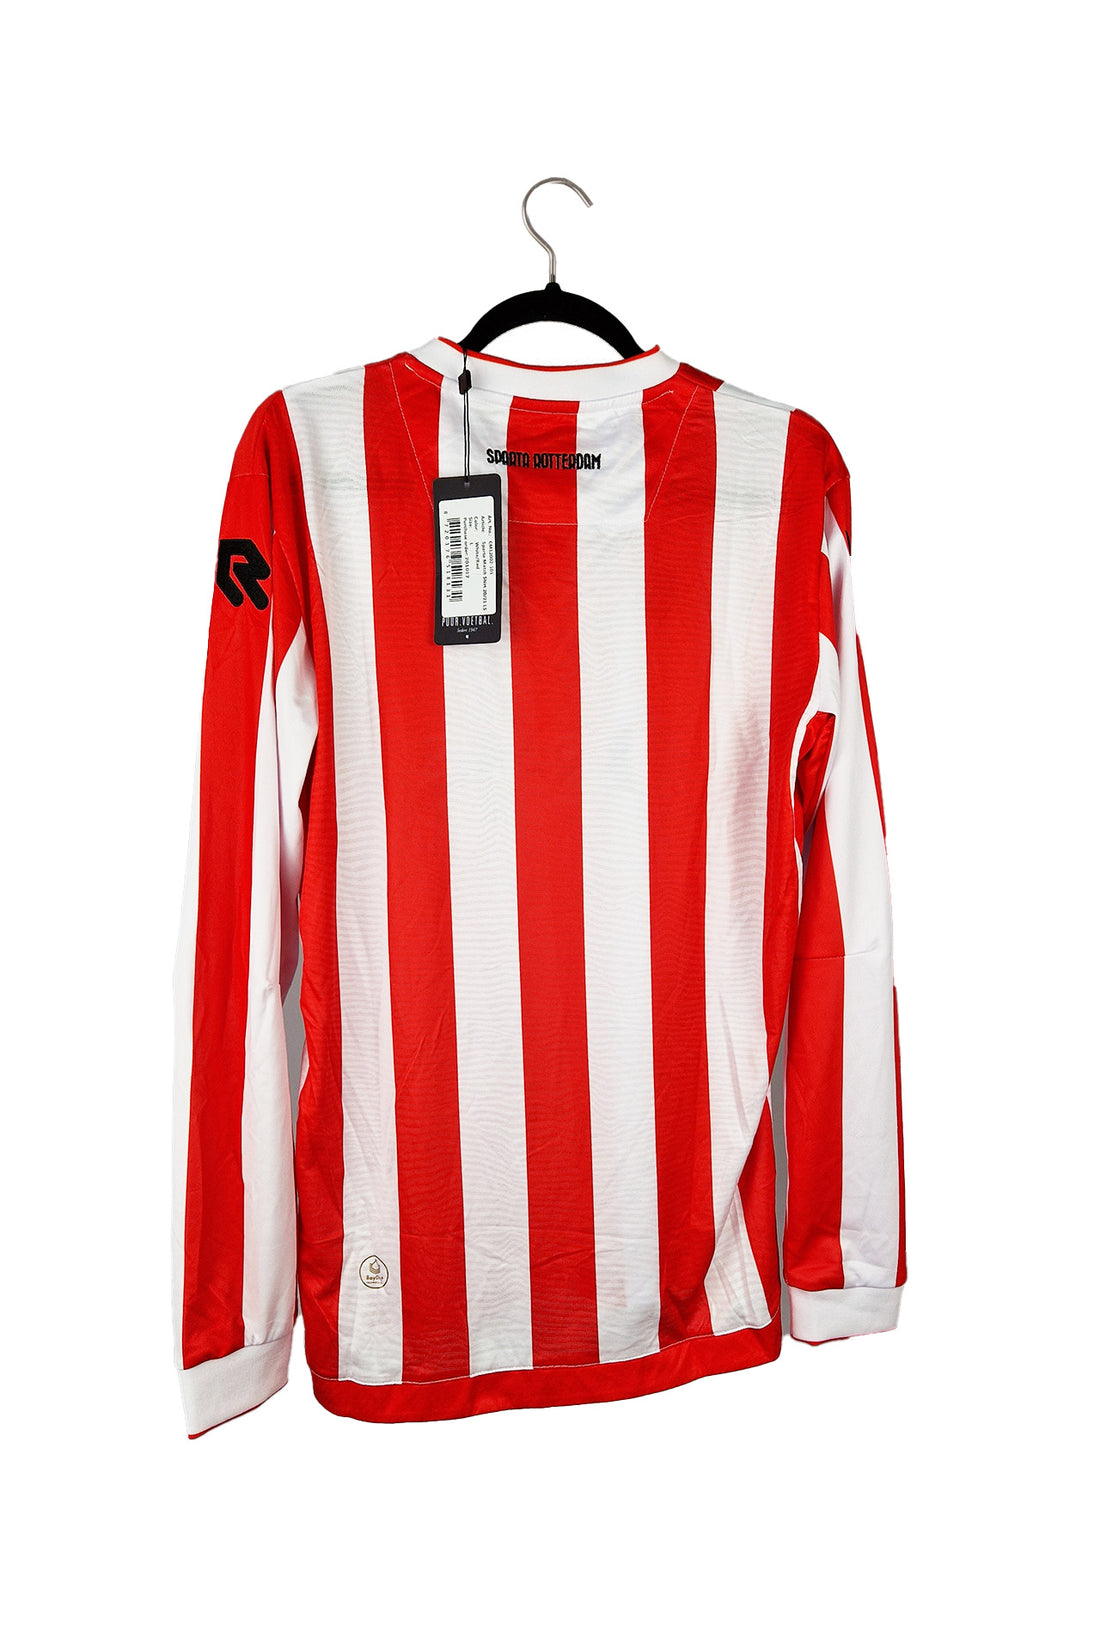 Sparta Rotterdam 2020 - 2021 L/S Home Football Shirt